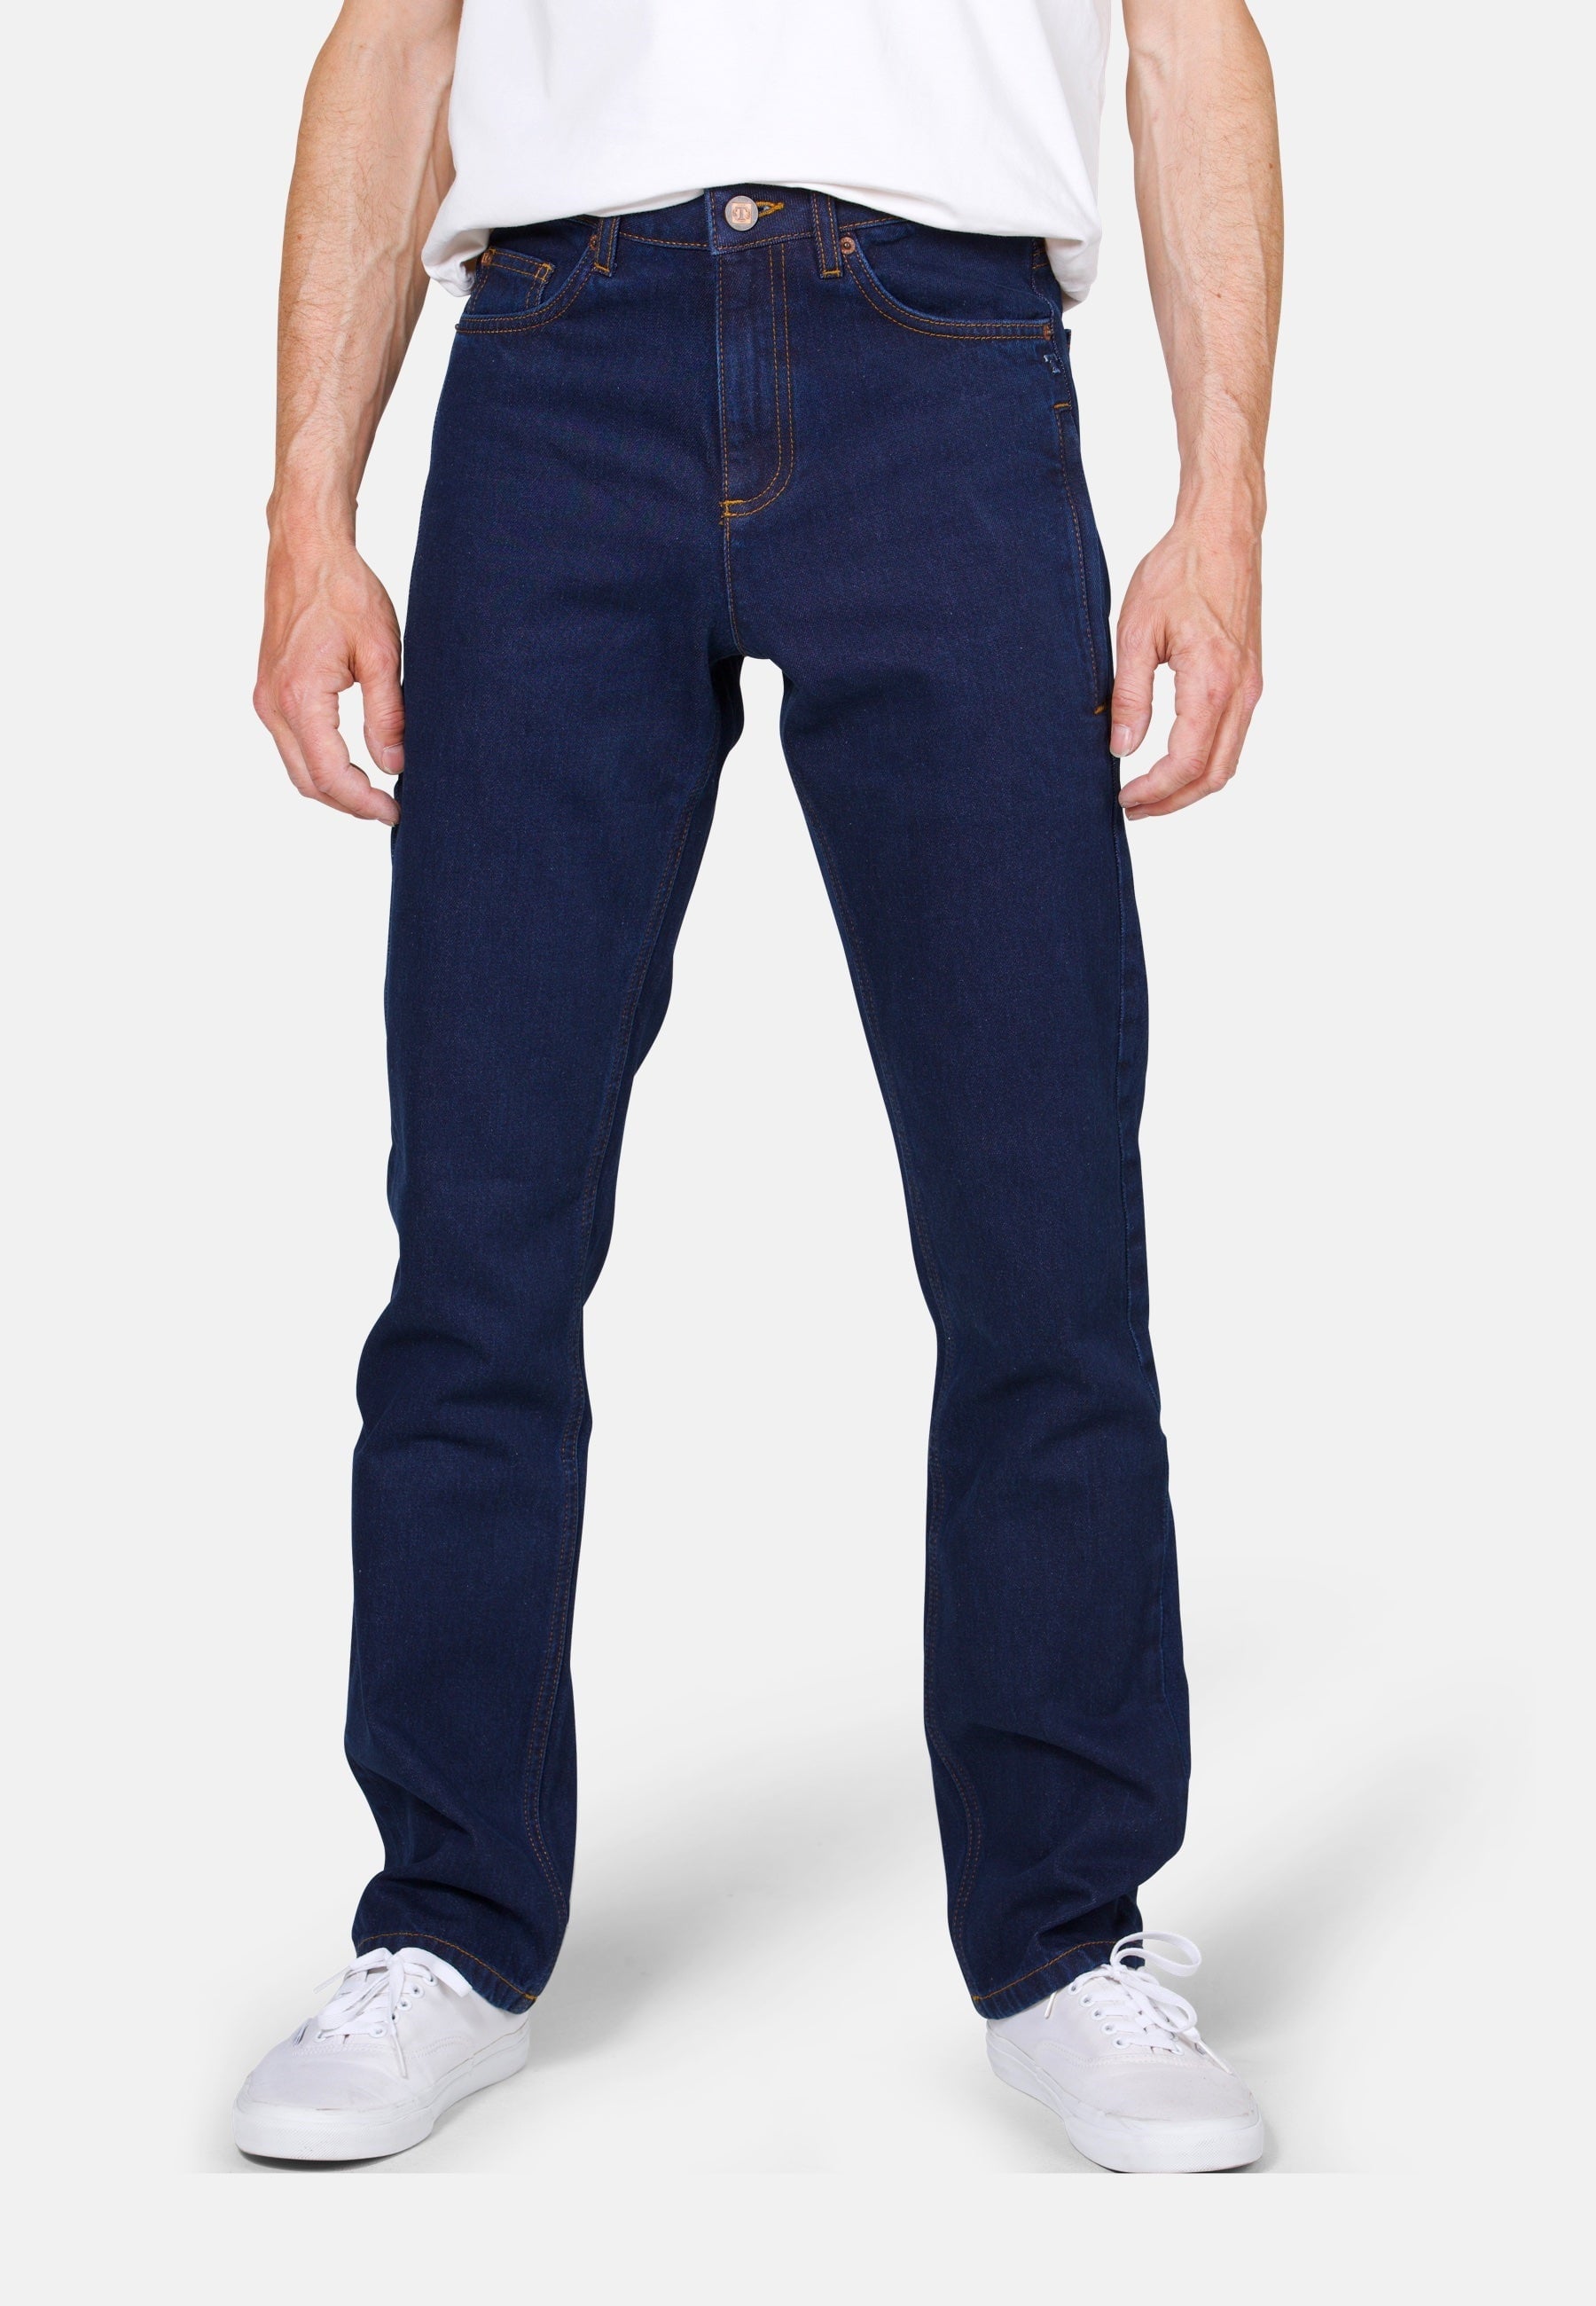 Straight Fit - Dark Wash Herren-Jeans Modell "LUCA"